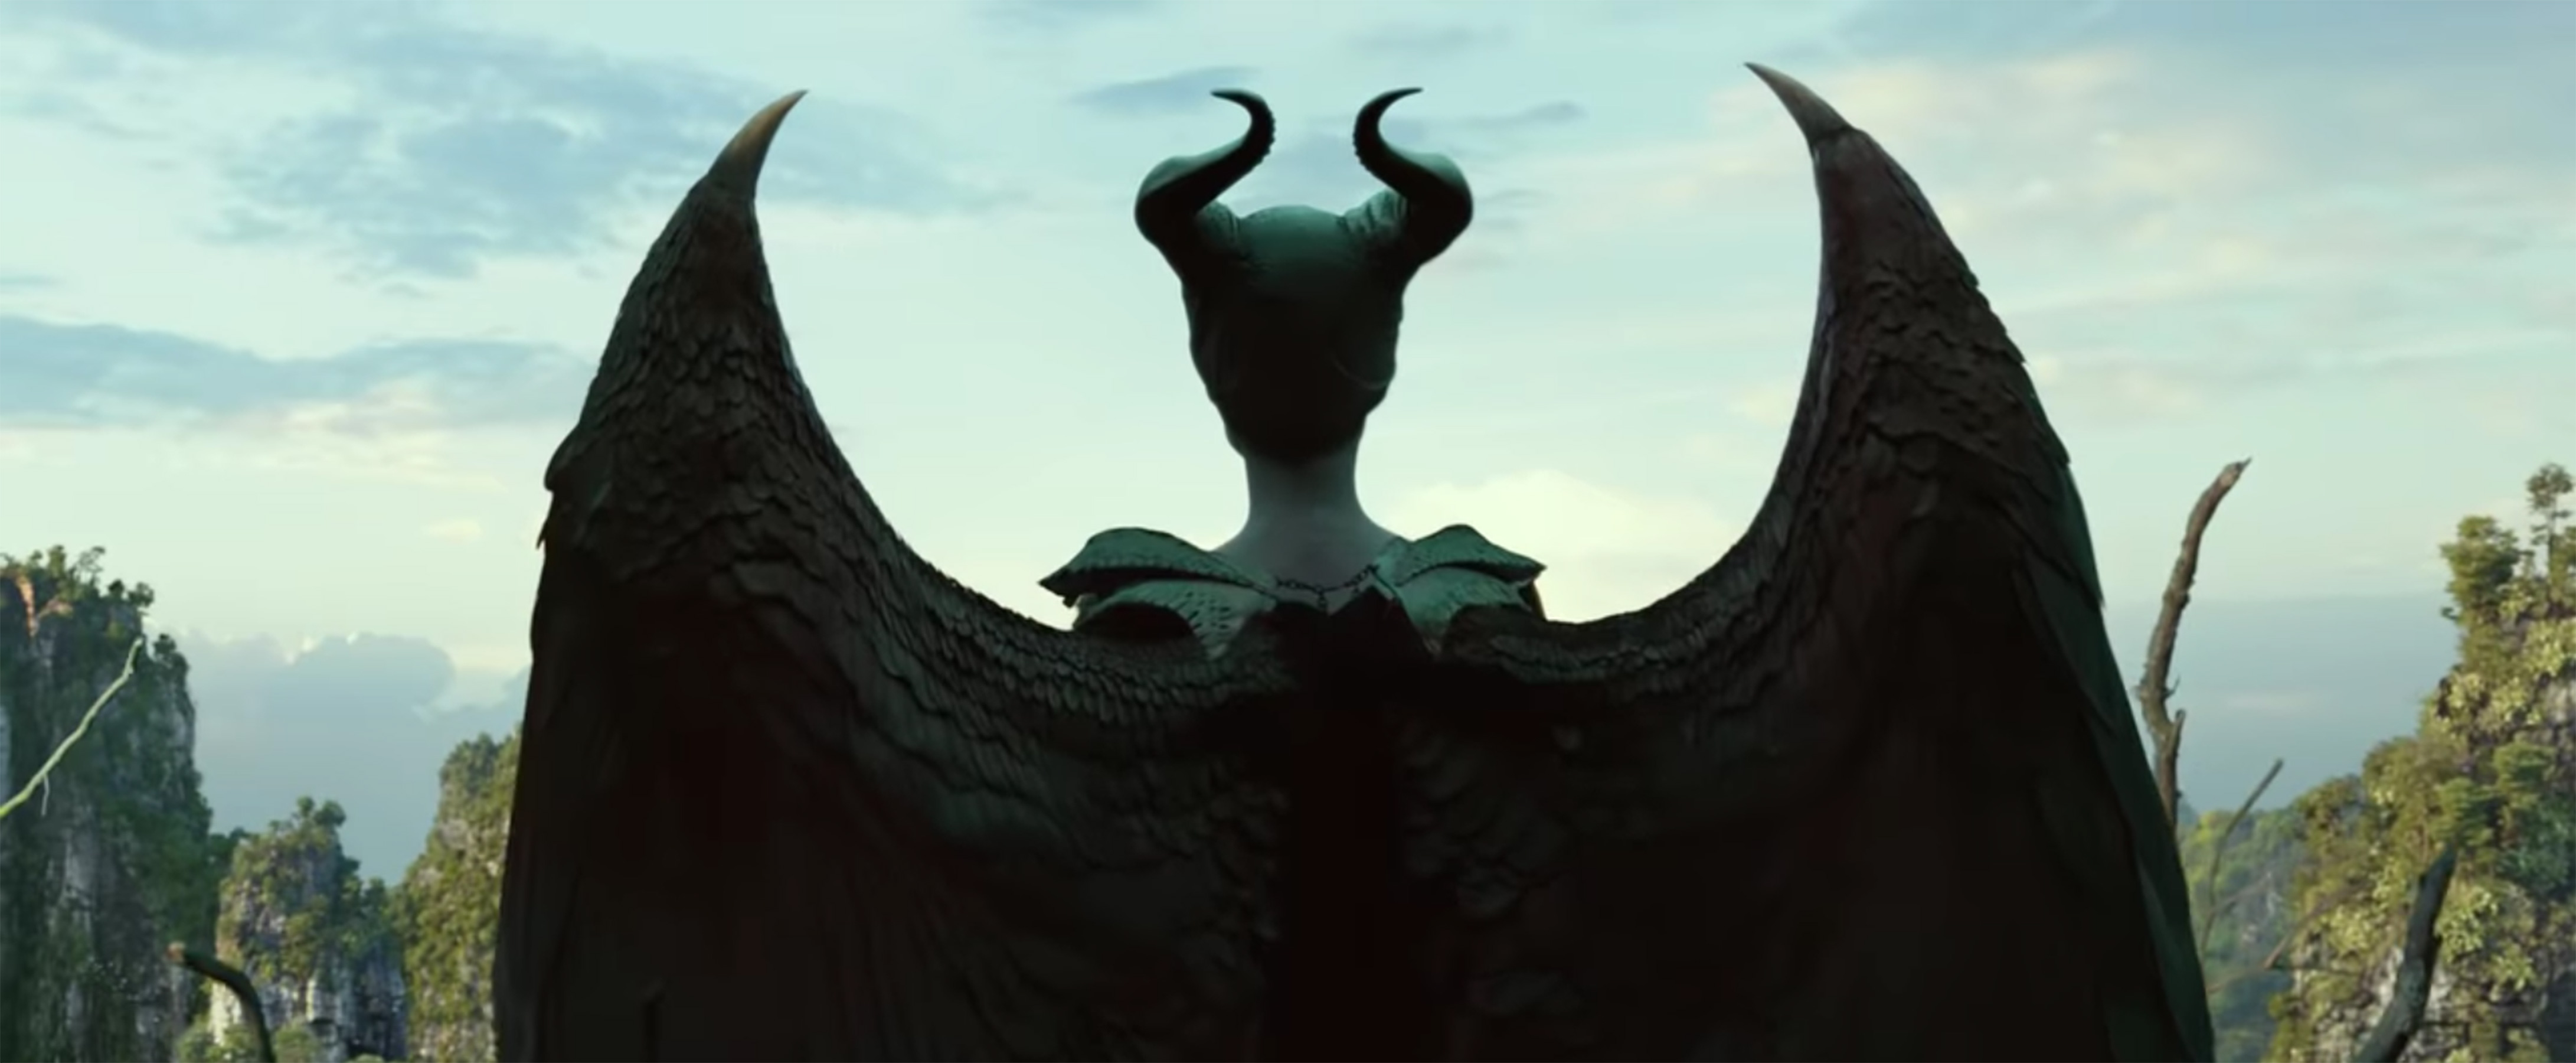 Maleficent. Mistress of Evil